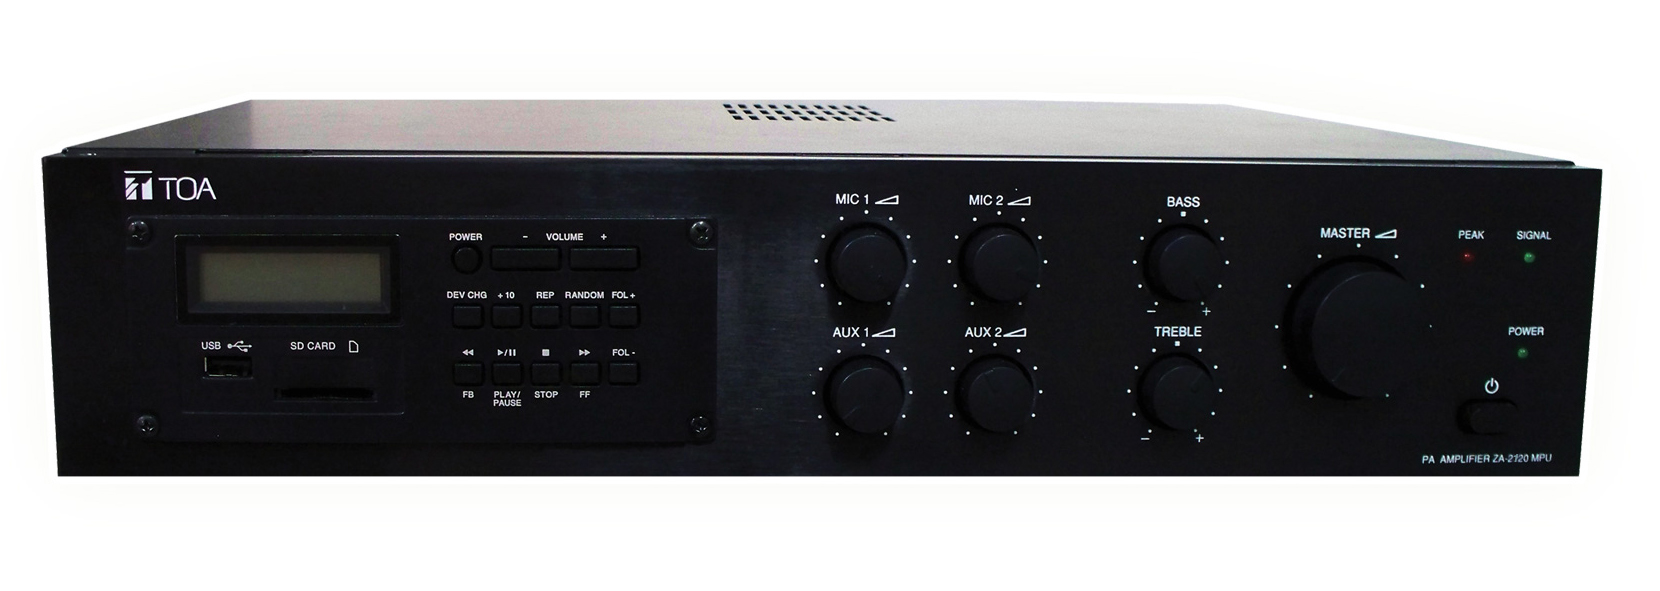 ZA-2120MPU Mixer Amplifier with MP3 Player